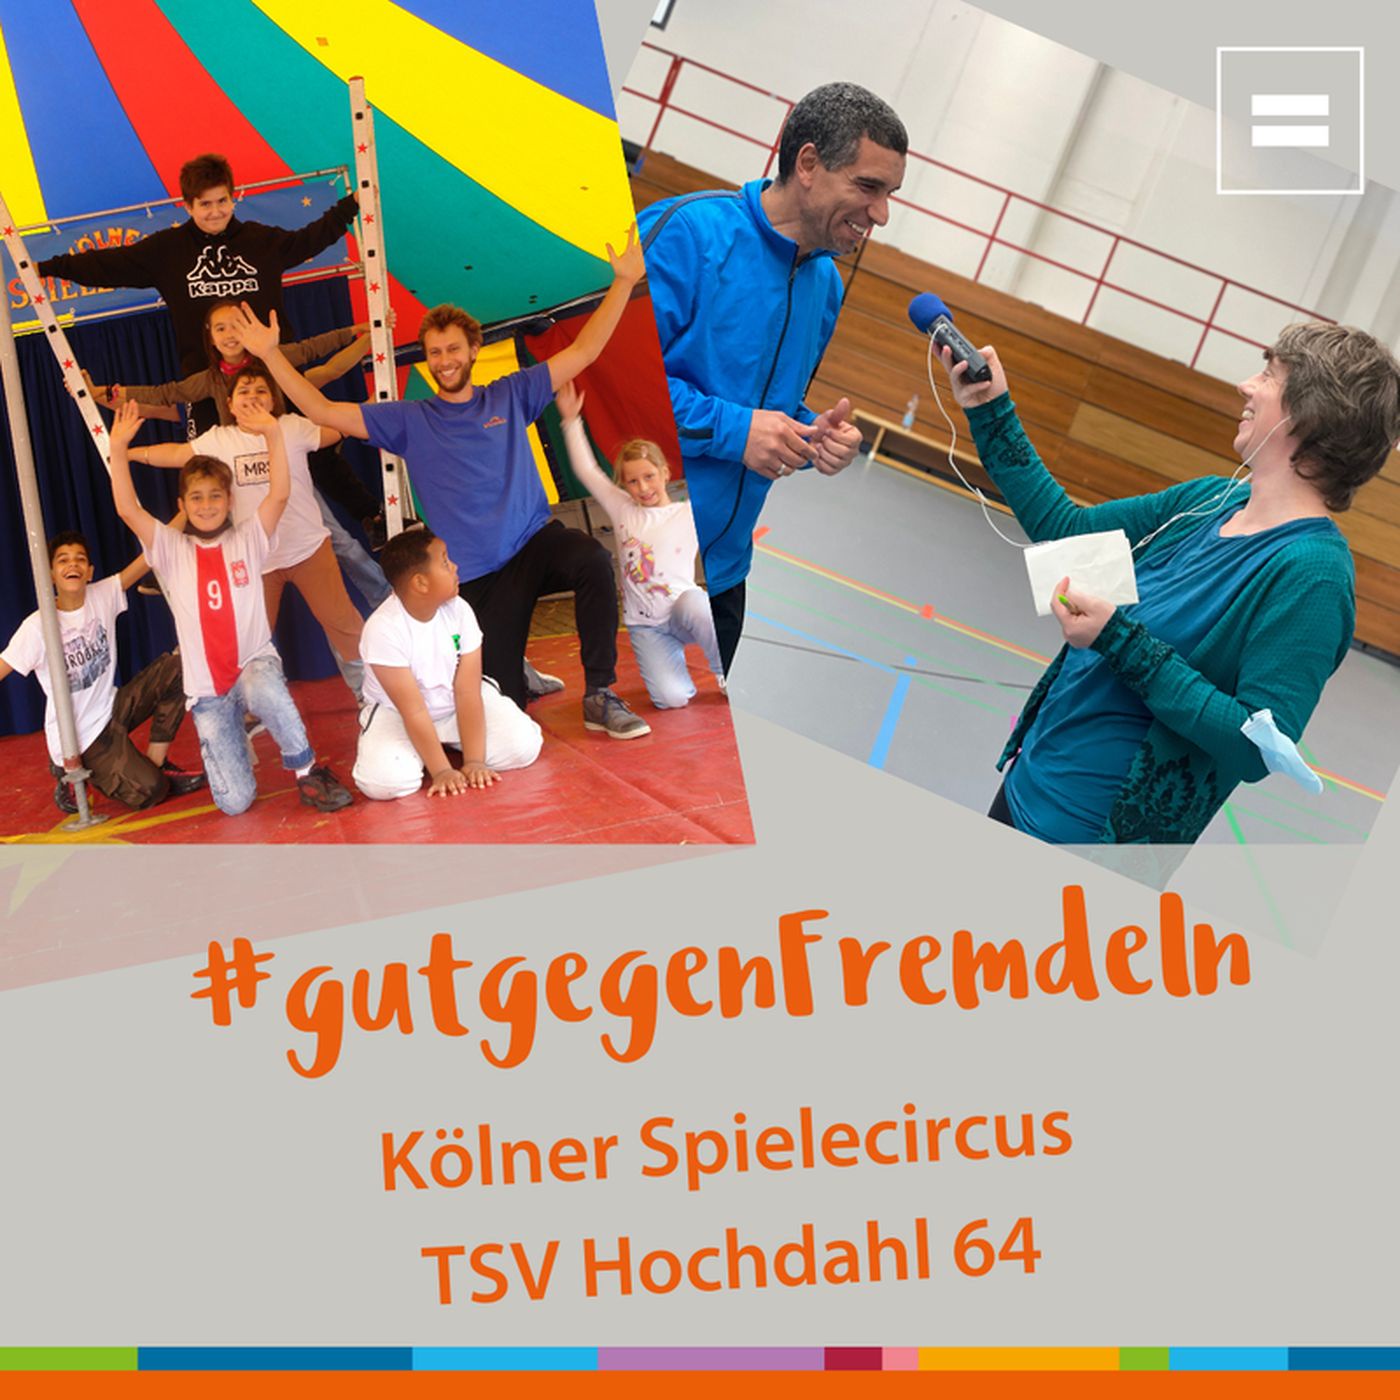 Folge 2 - Kölner Spielecircus & TSV Hochdahl 64 - Gut gegen Fremdeln (PJW NRW)